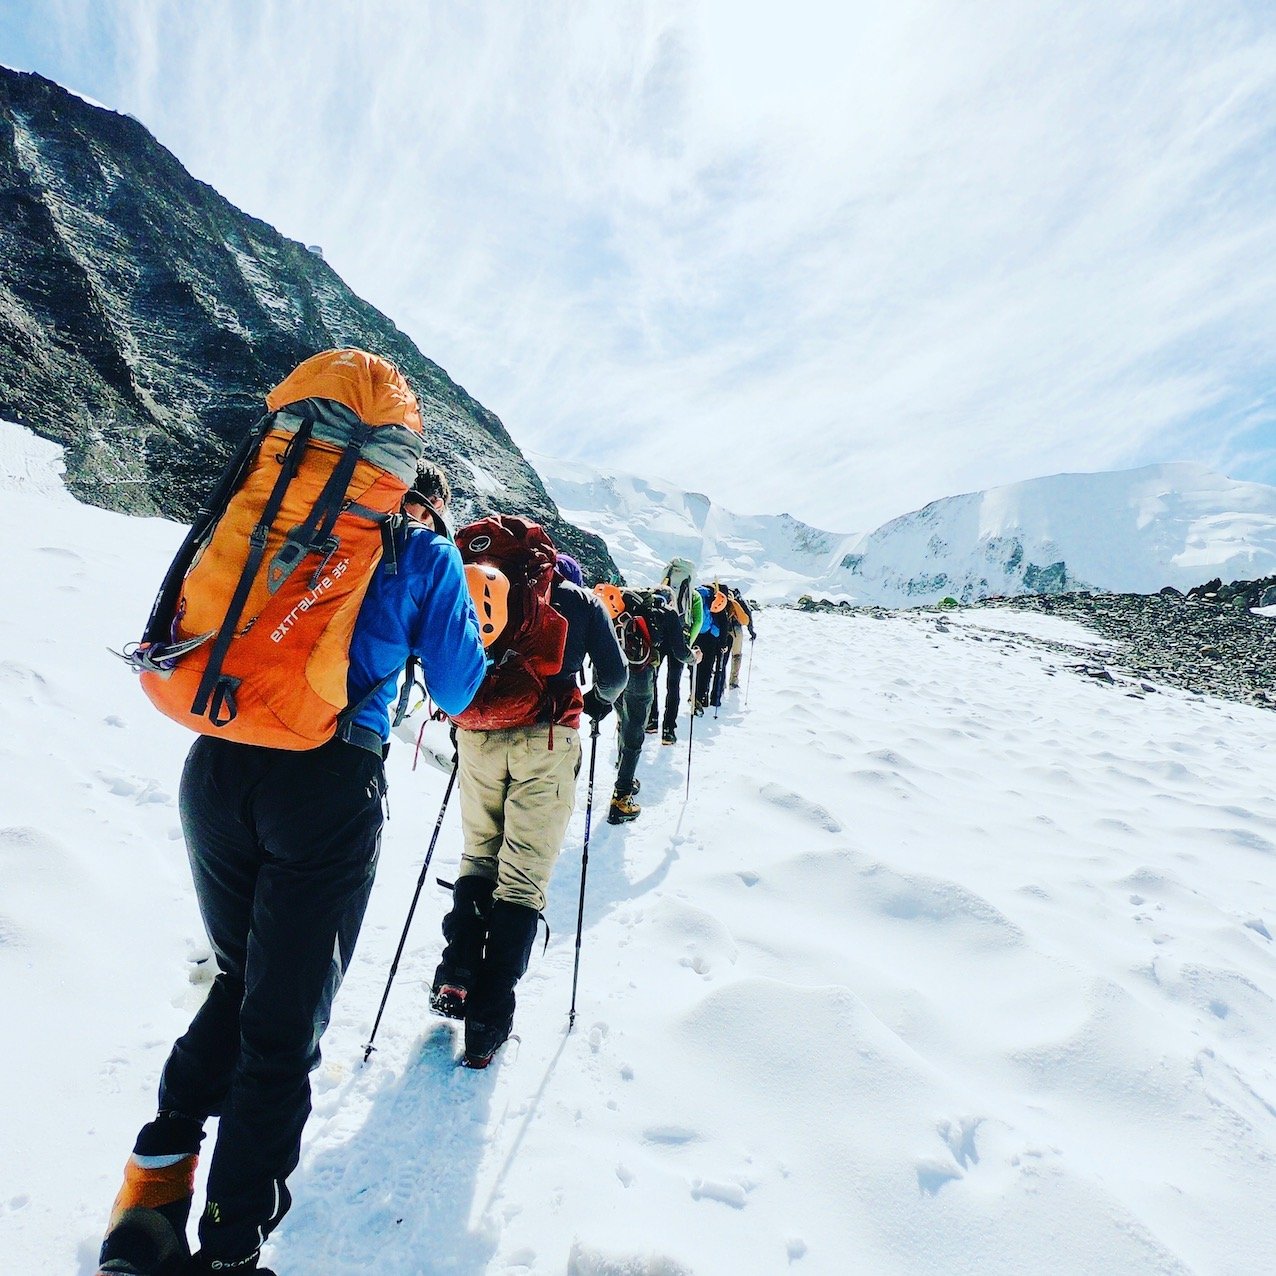 Mont Blanc Summit 4,810m (15,781ft), France – Kosher and Shomer Shabbat